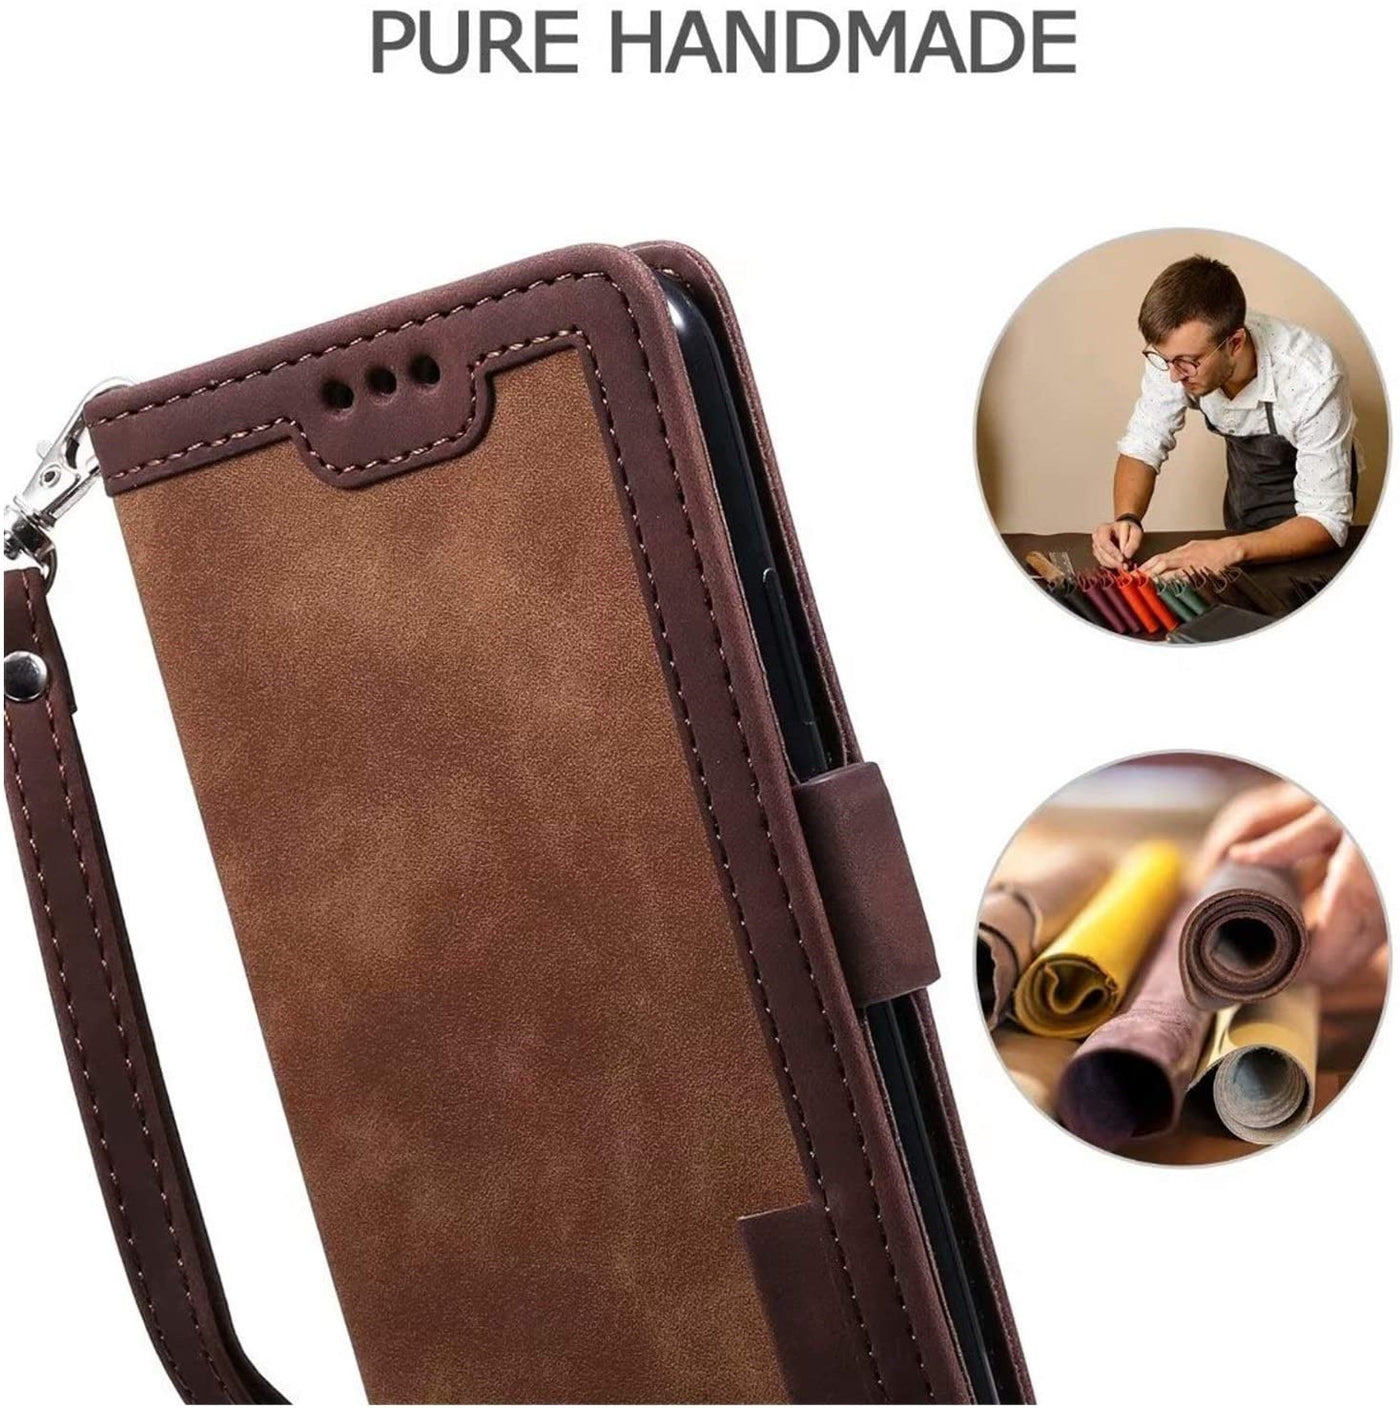 Oneplus Nord CE 2 high quality premium and unique designer leather case cover